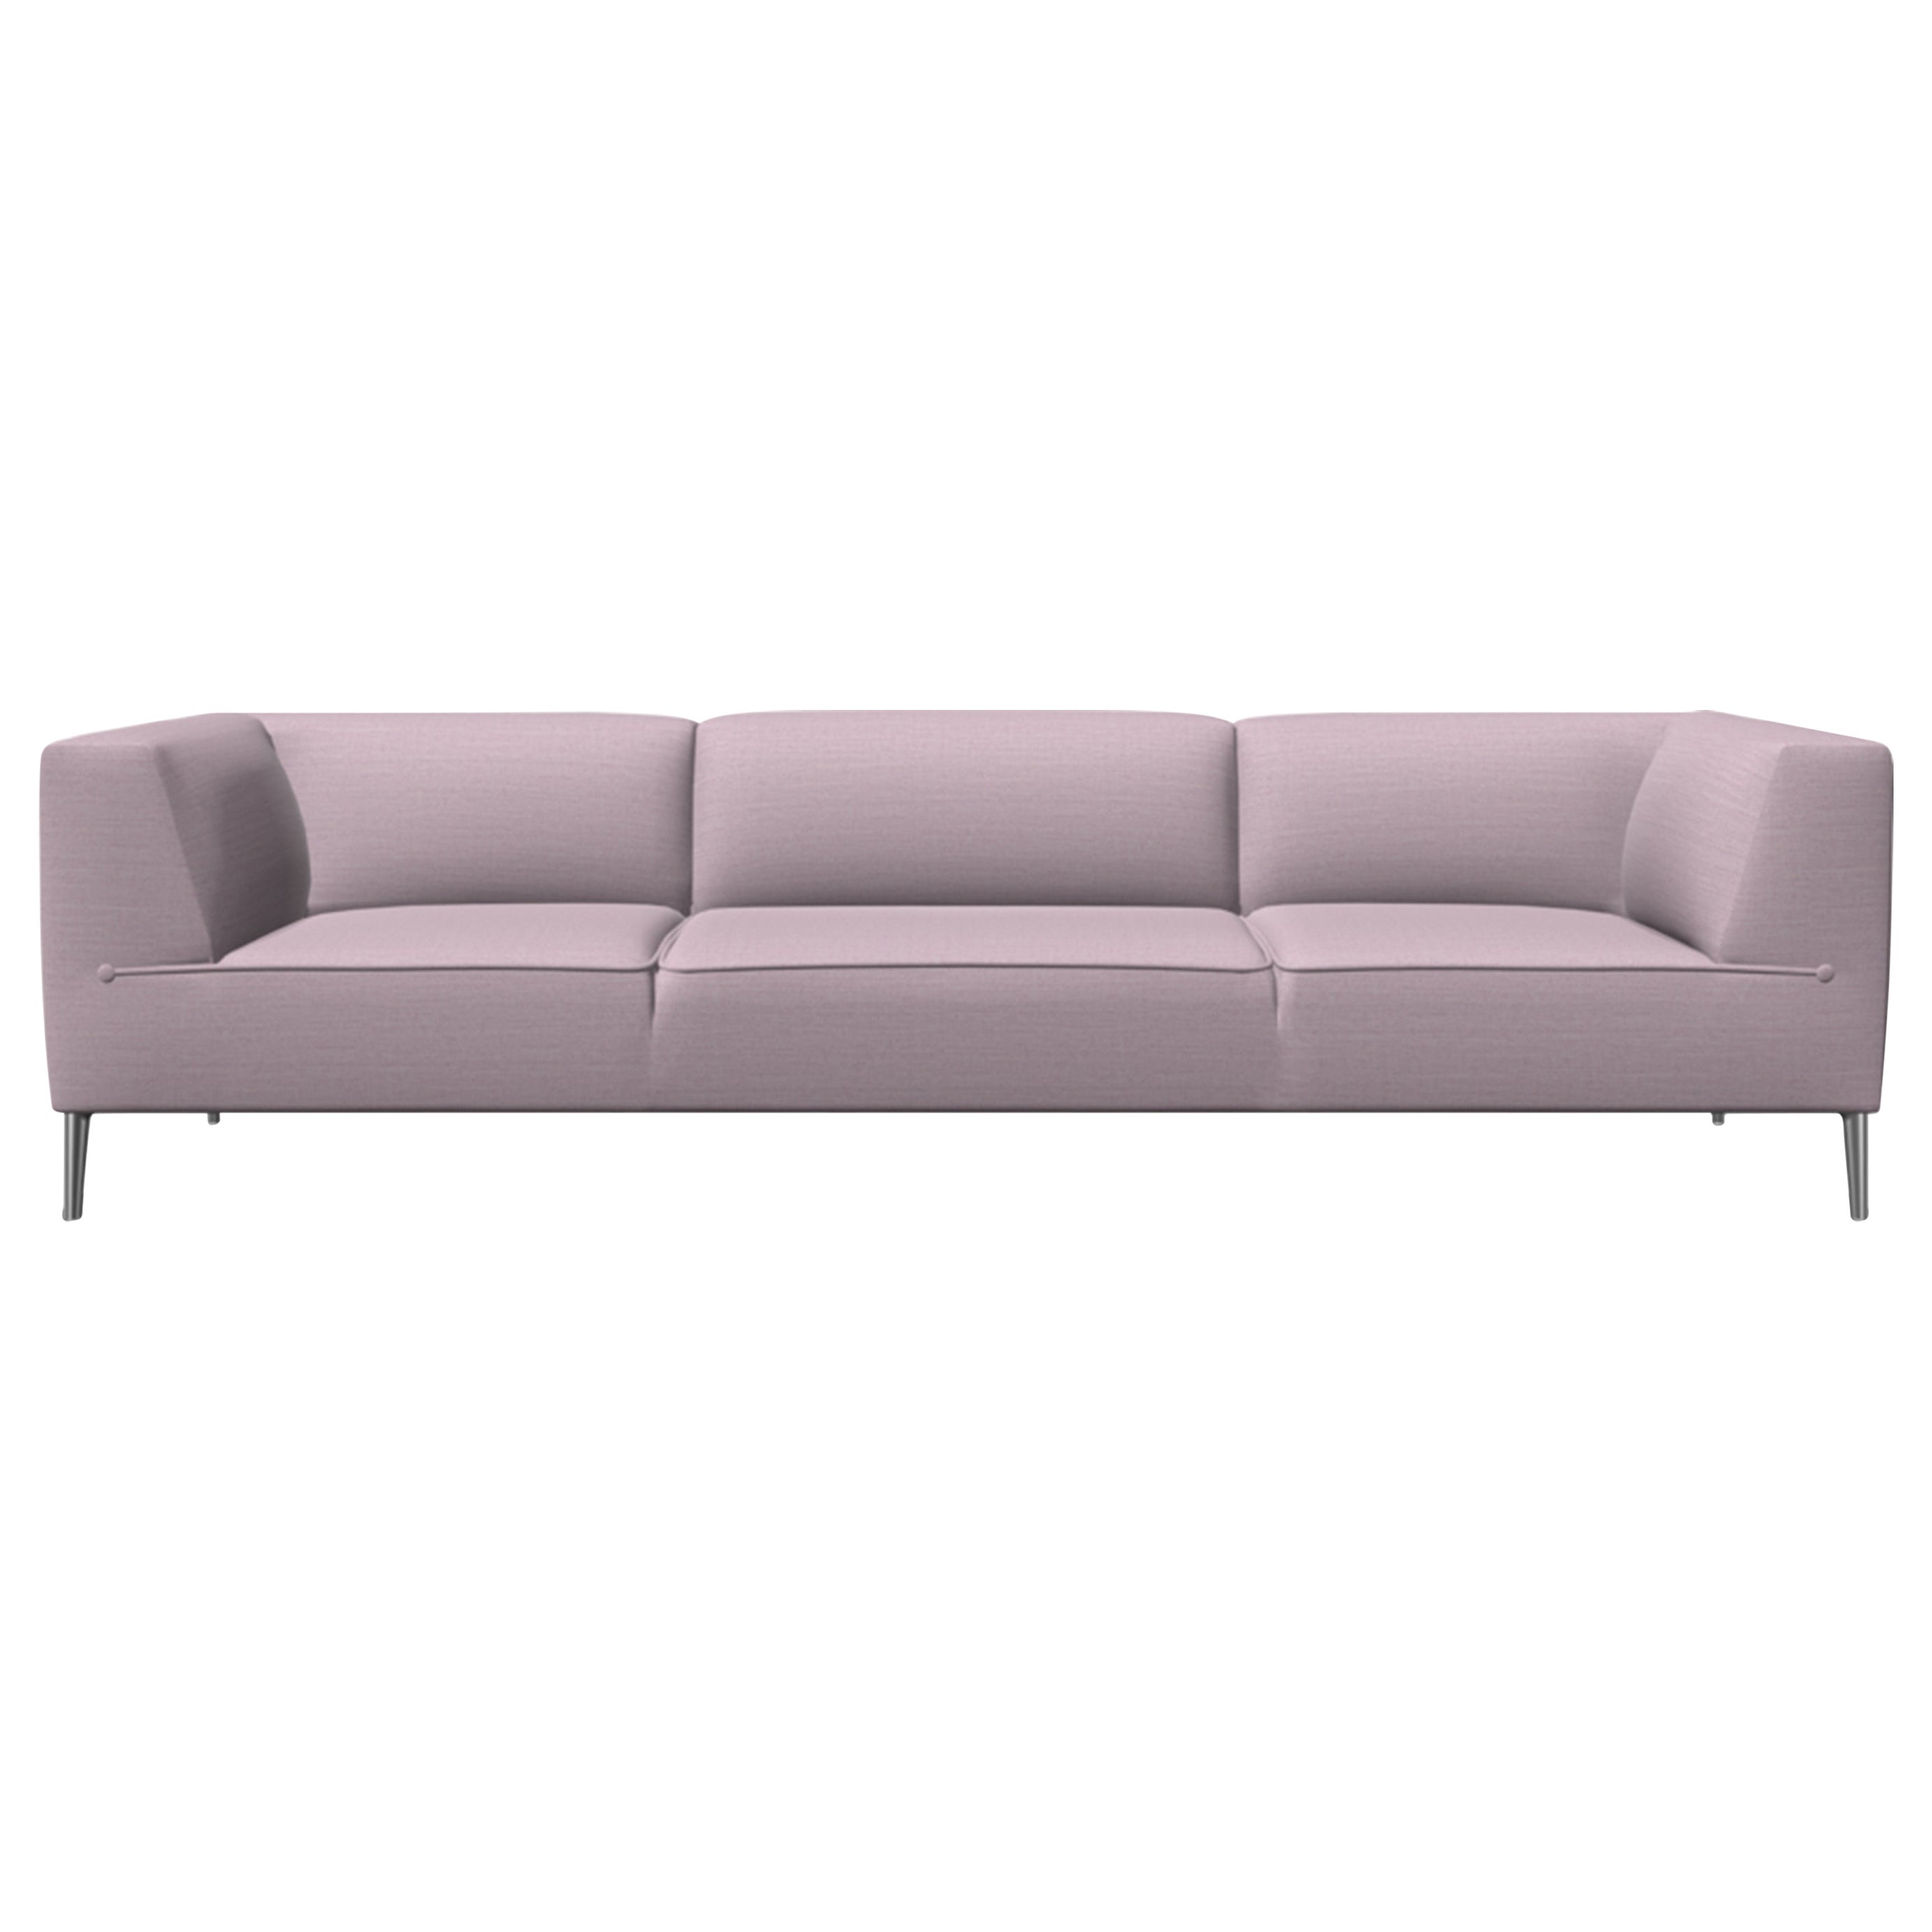 Moooi Triple Seat Sofa So Good in Fiord, 551 Upholstery & Polished Aluminum Feet